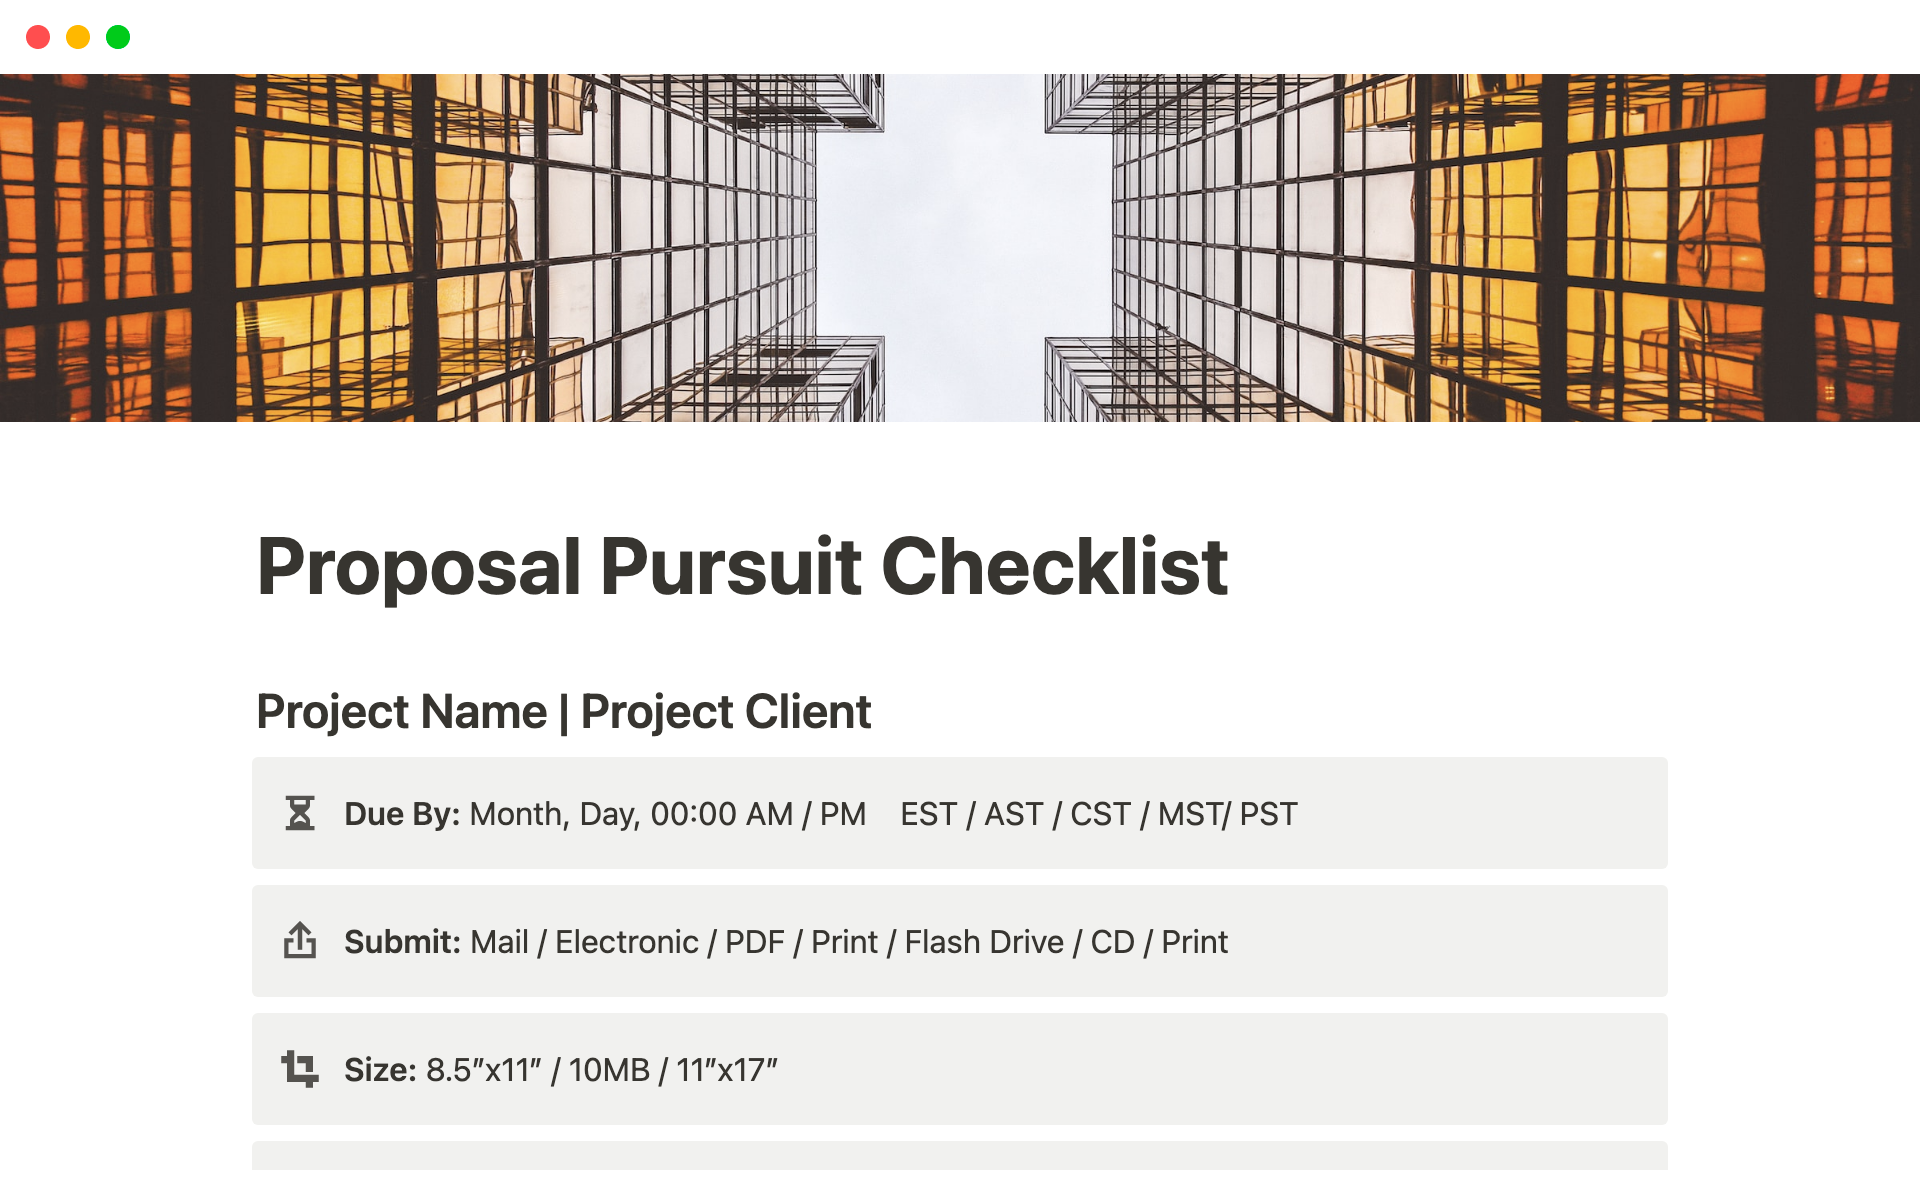 Vista previa de plantilla para Proposal Pursuit Checklist